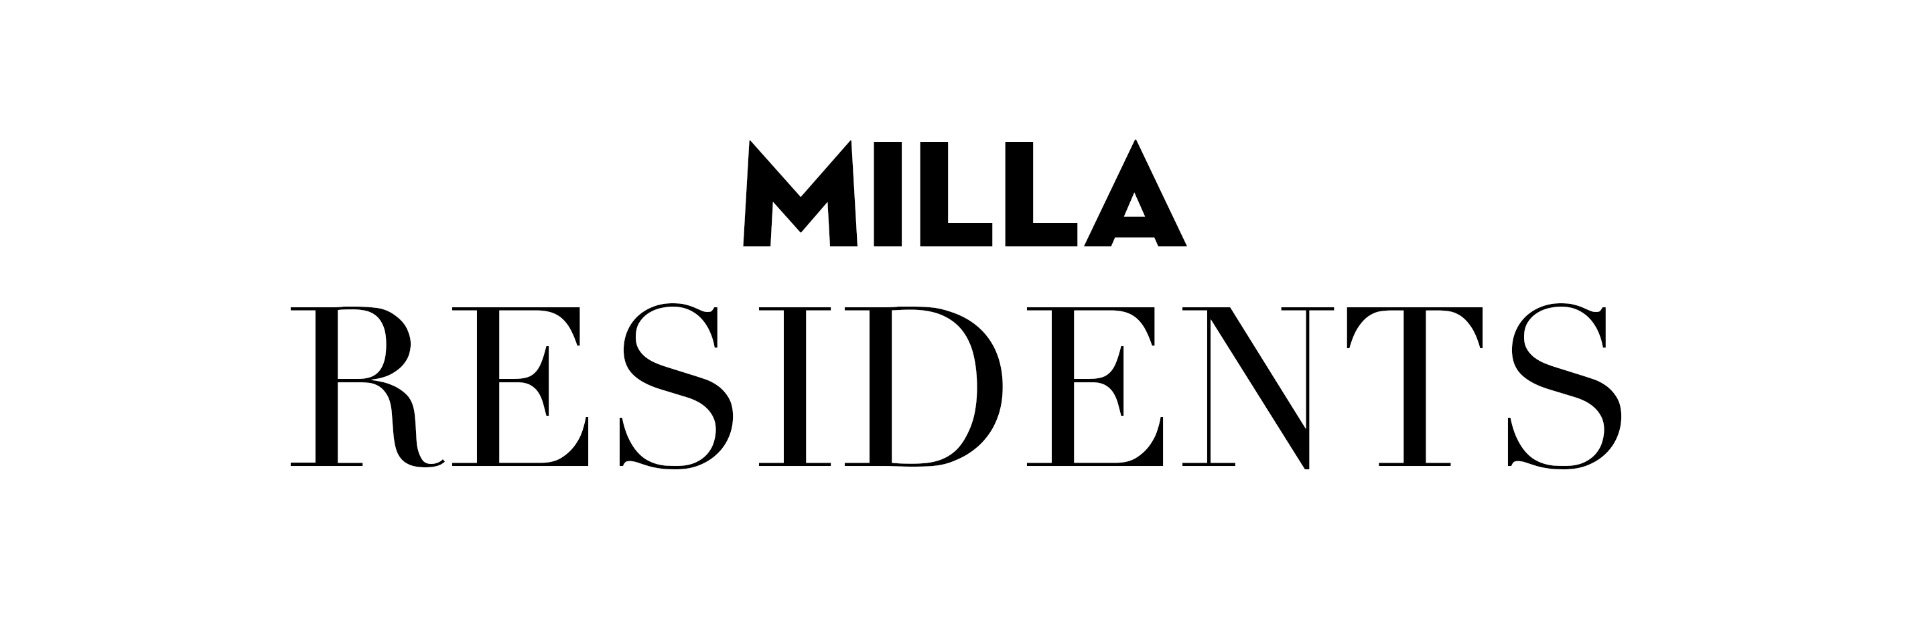 milla-residents-hero